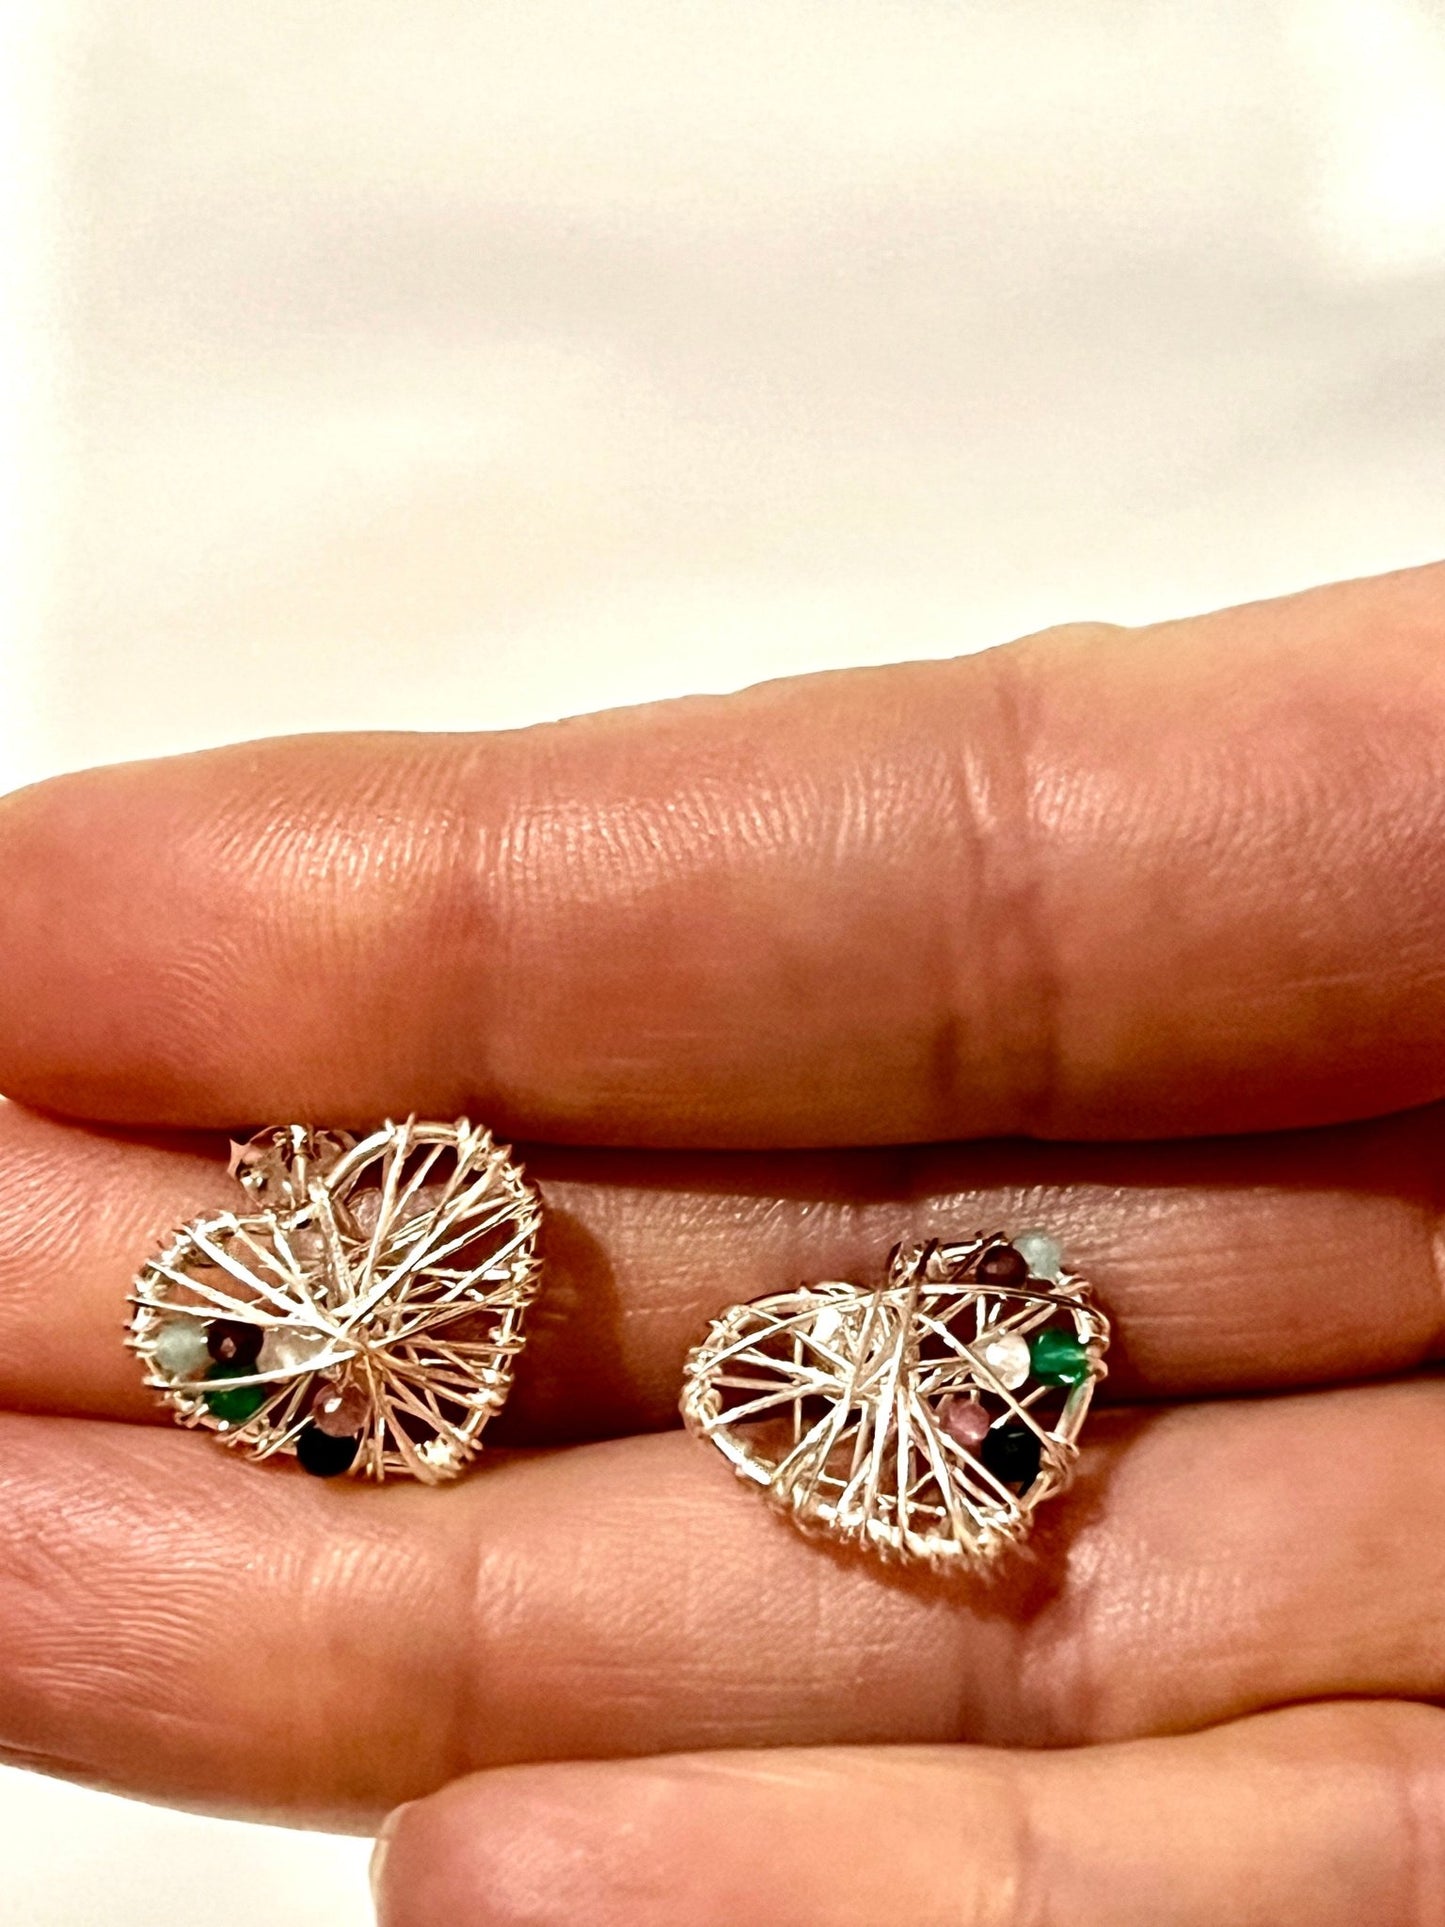 Delicate silver heart earrings with colorful gemstones - Sundara Joon